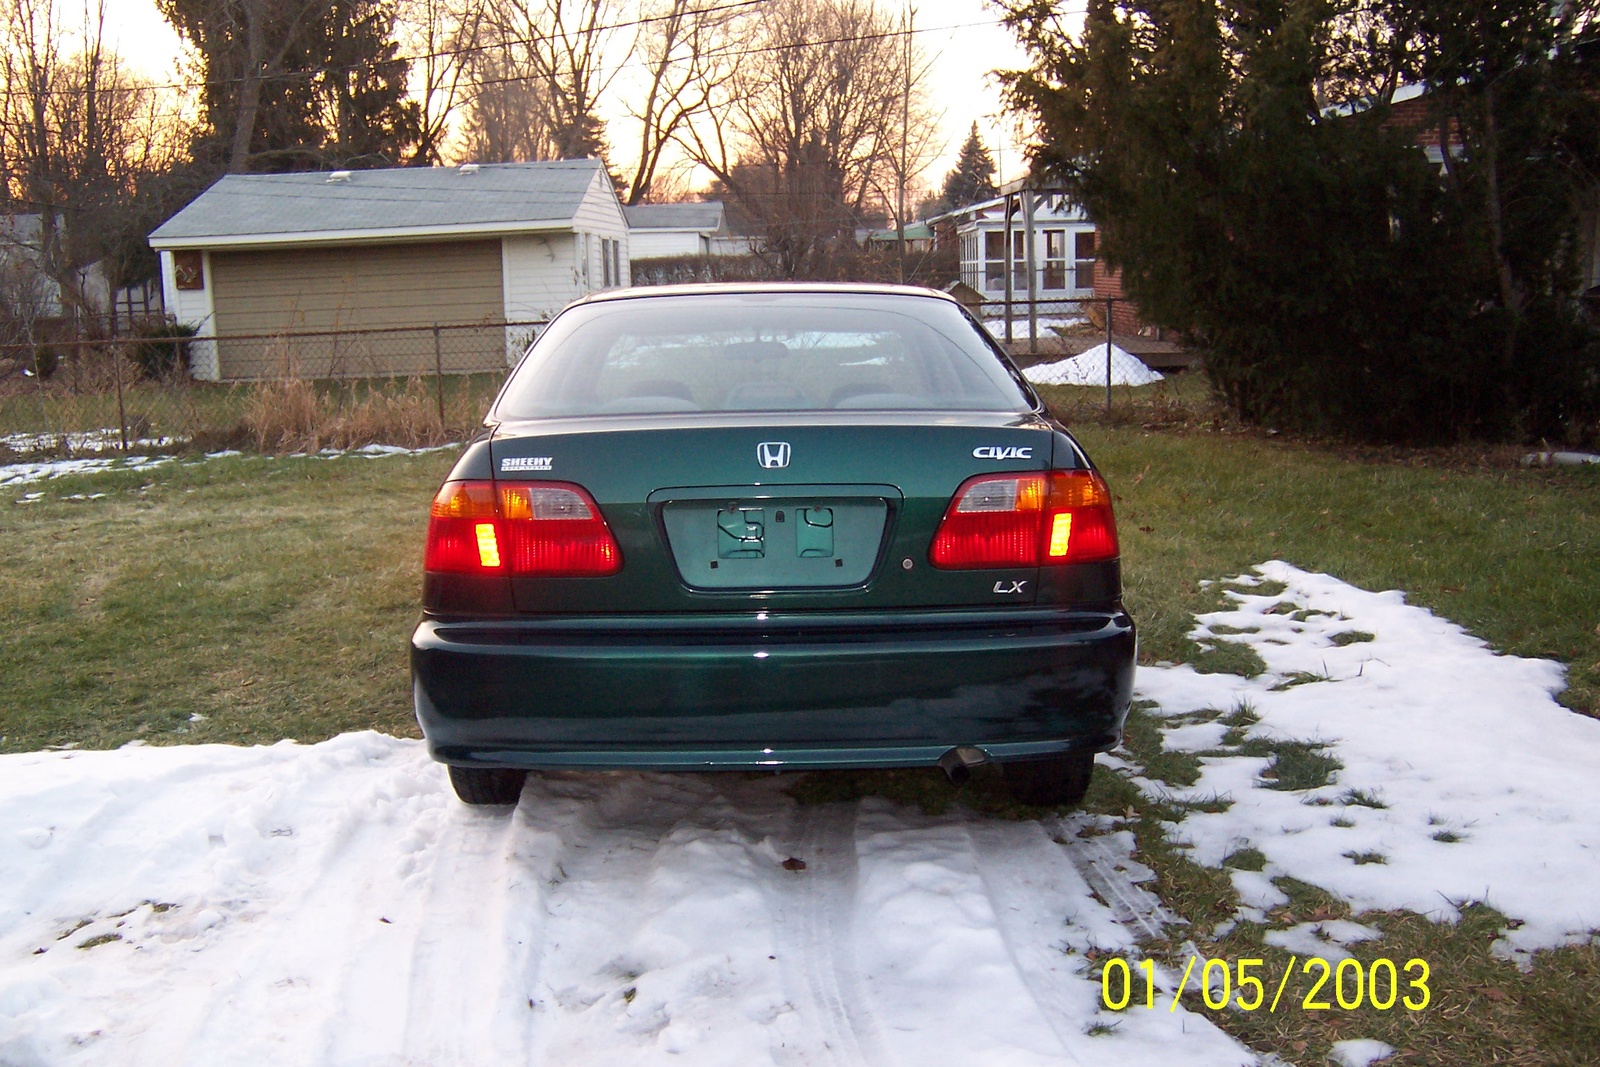 1999 Honda civic lx sedan review #5